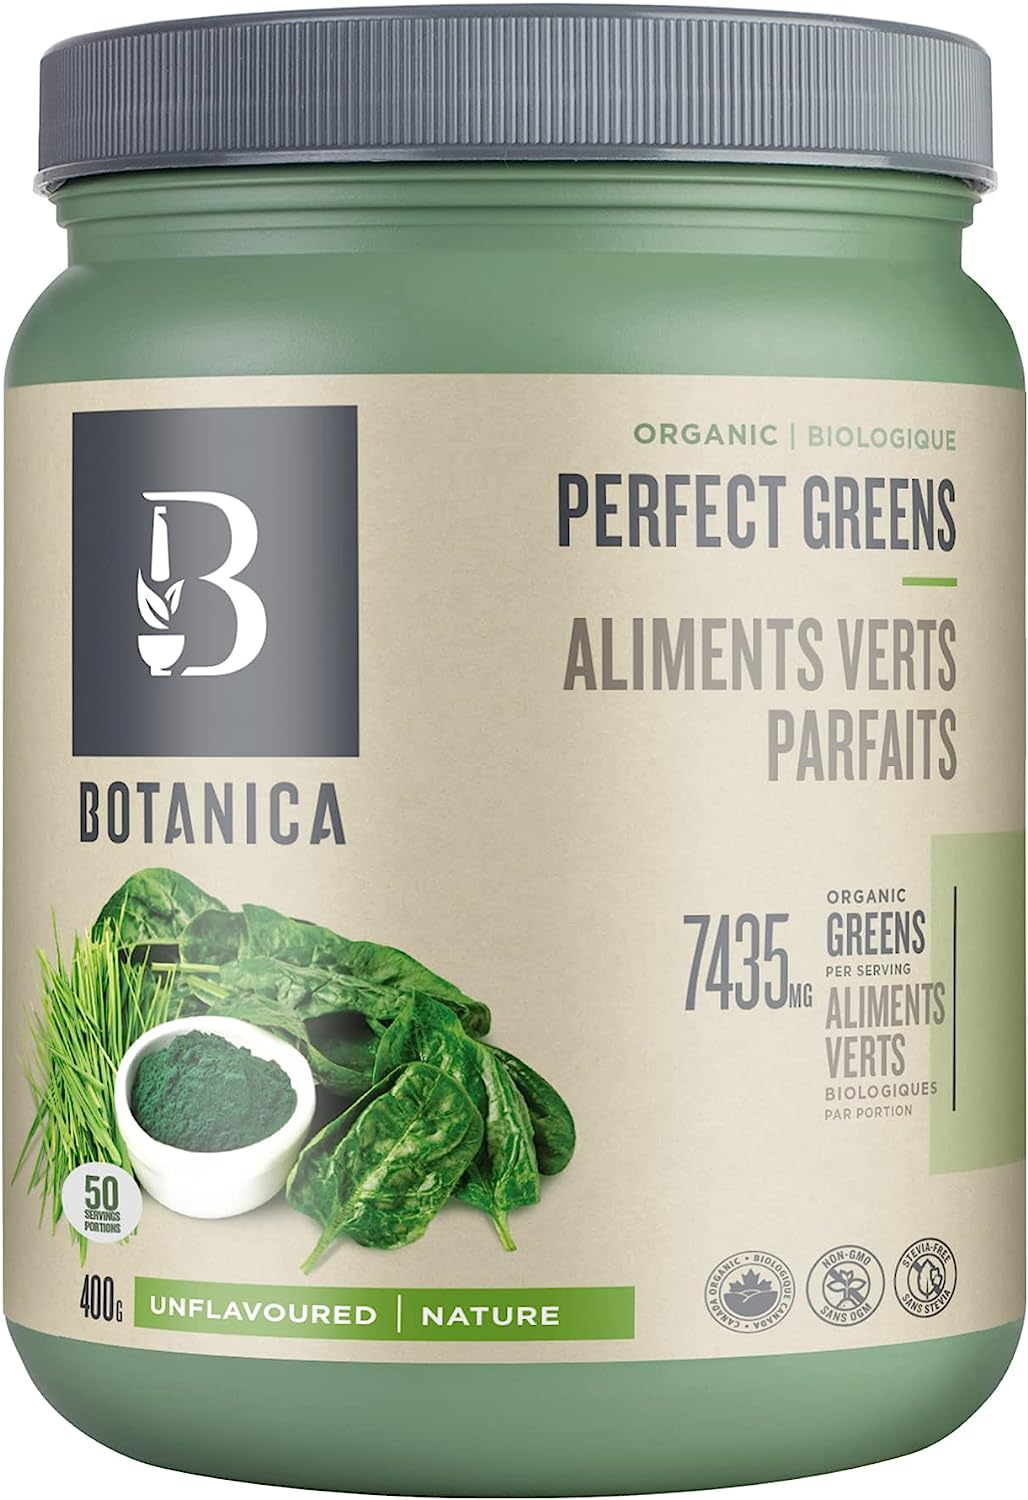 Botanica Perfect Greens Organic 400g / Unflavoured